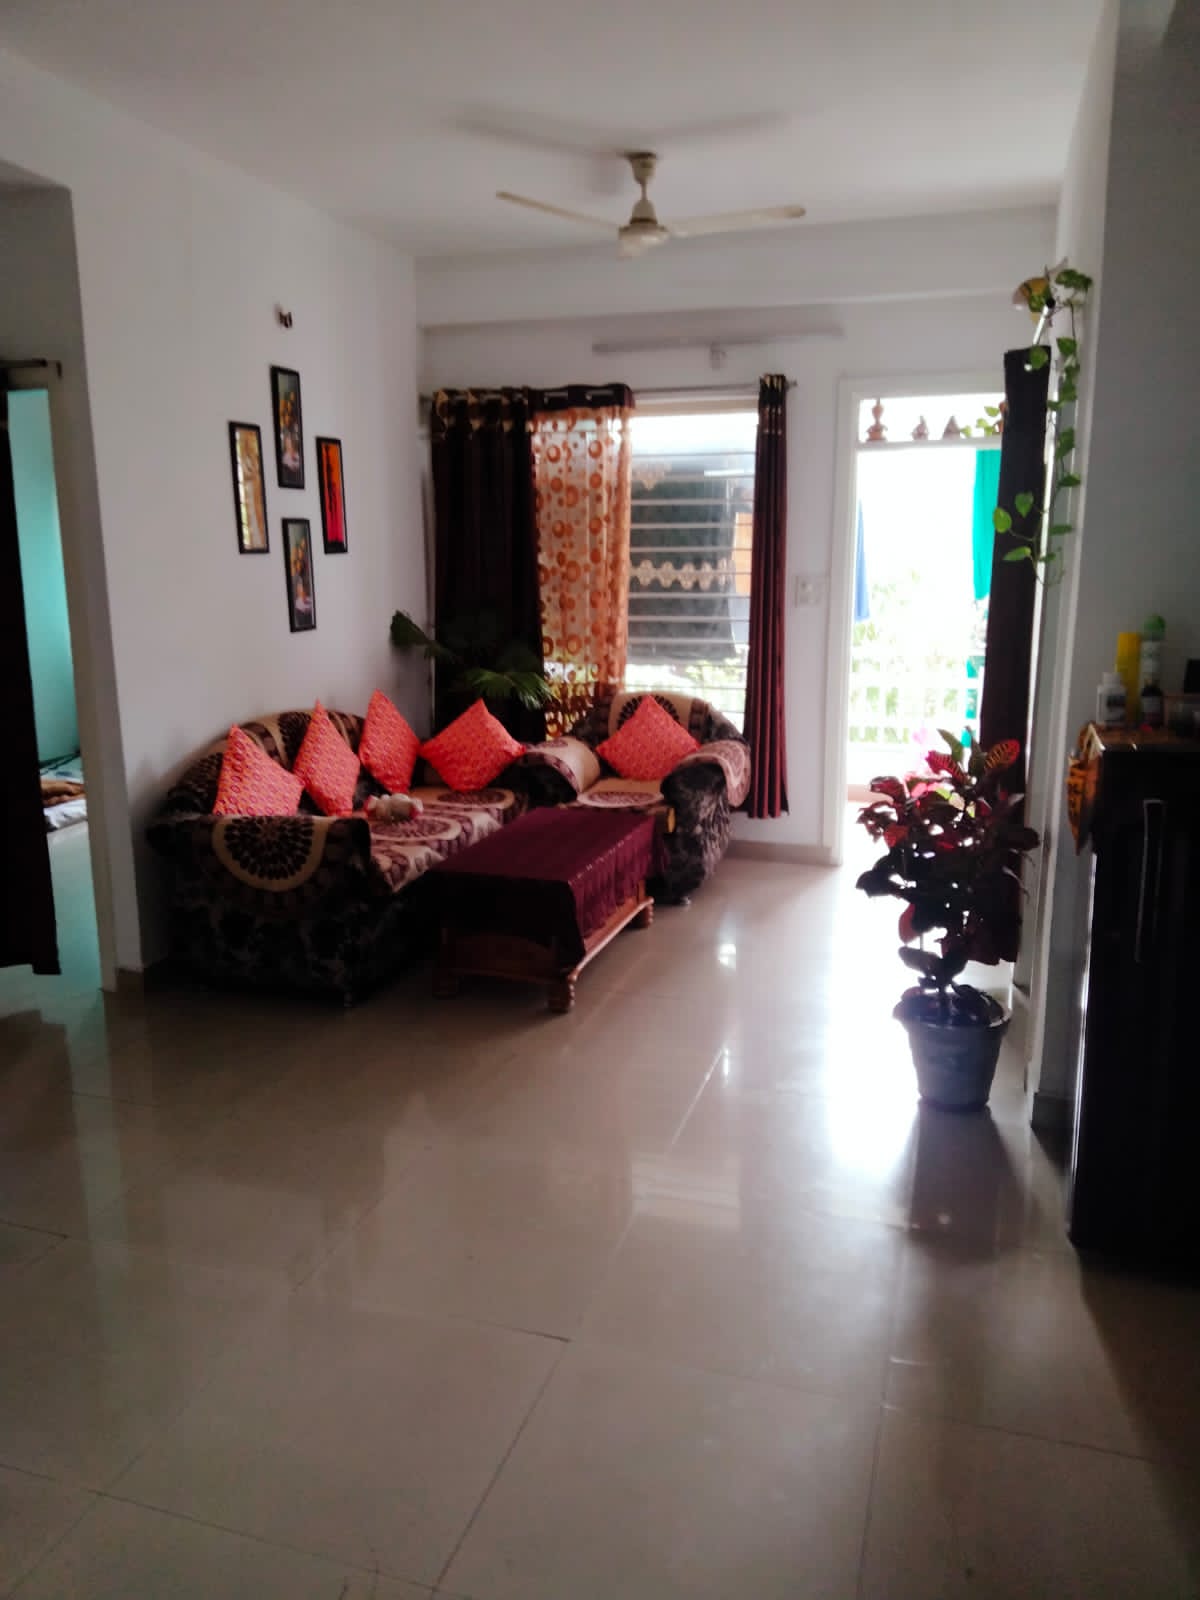 3bhk flat in signature residency shirdipuram near jk hospital kolar road for rent a very prime location